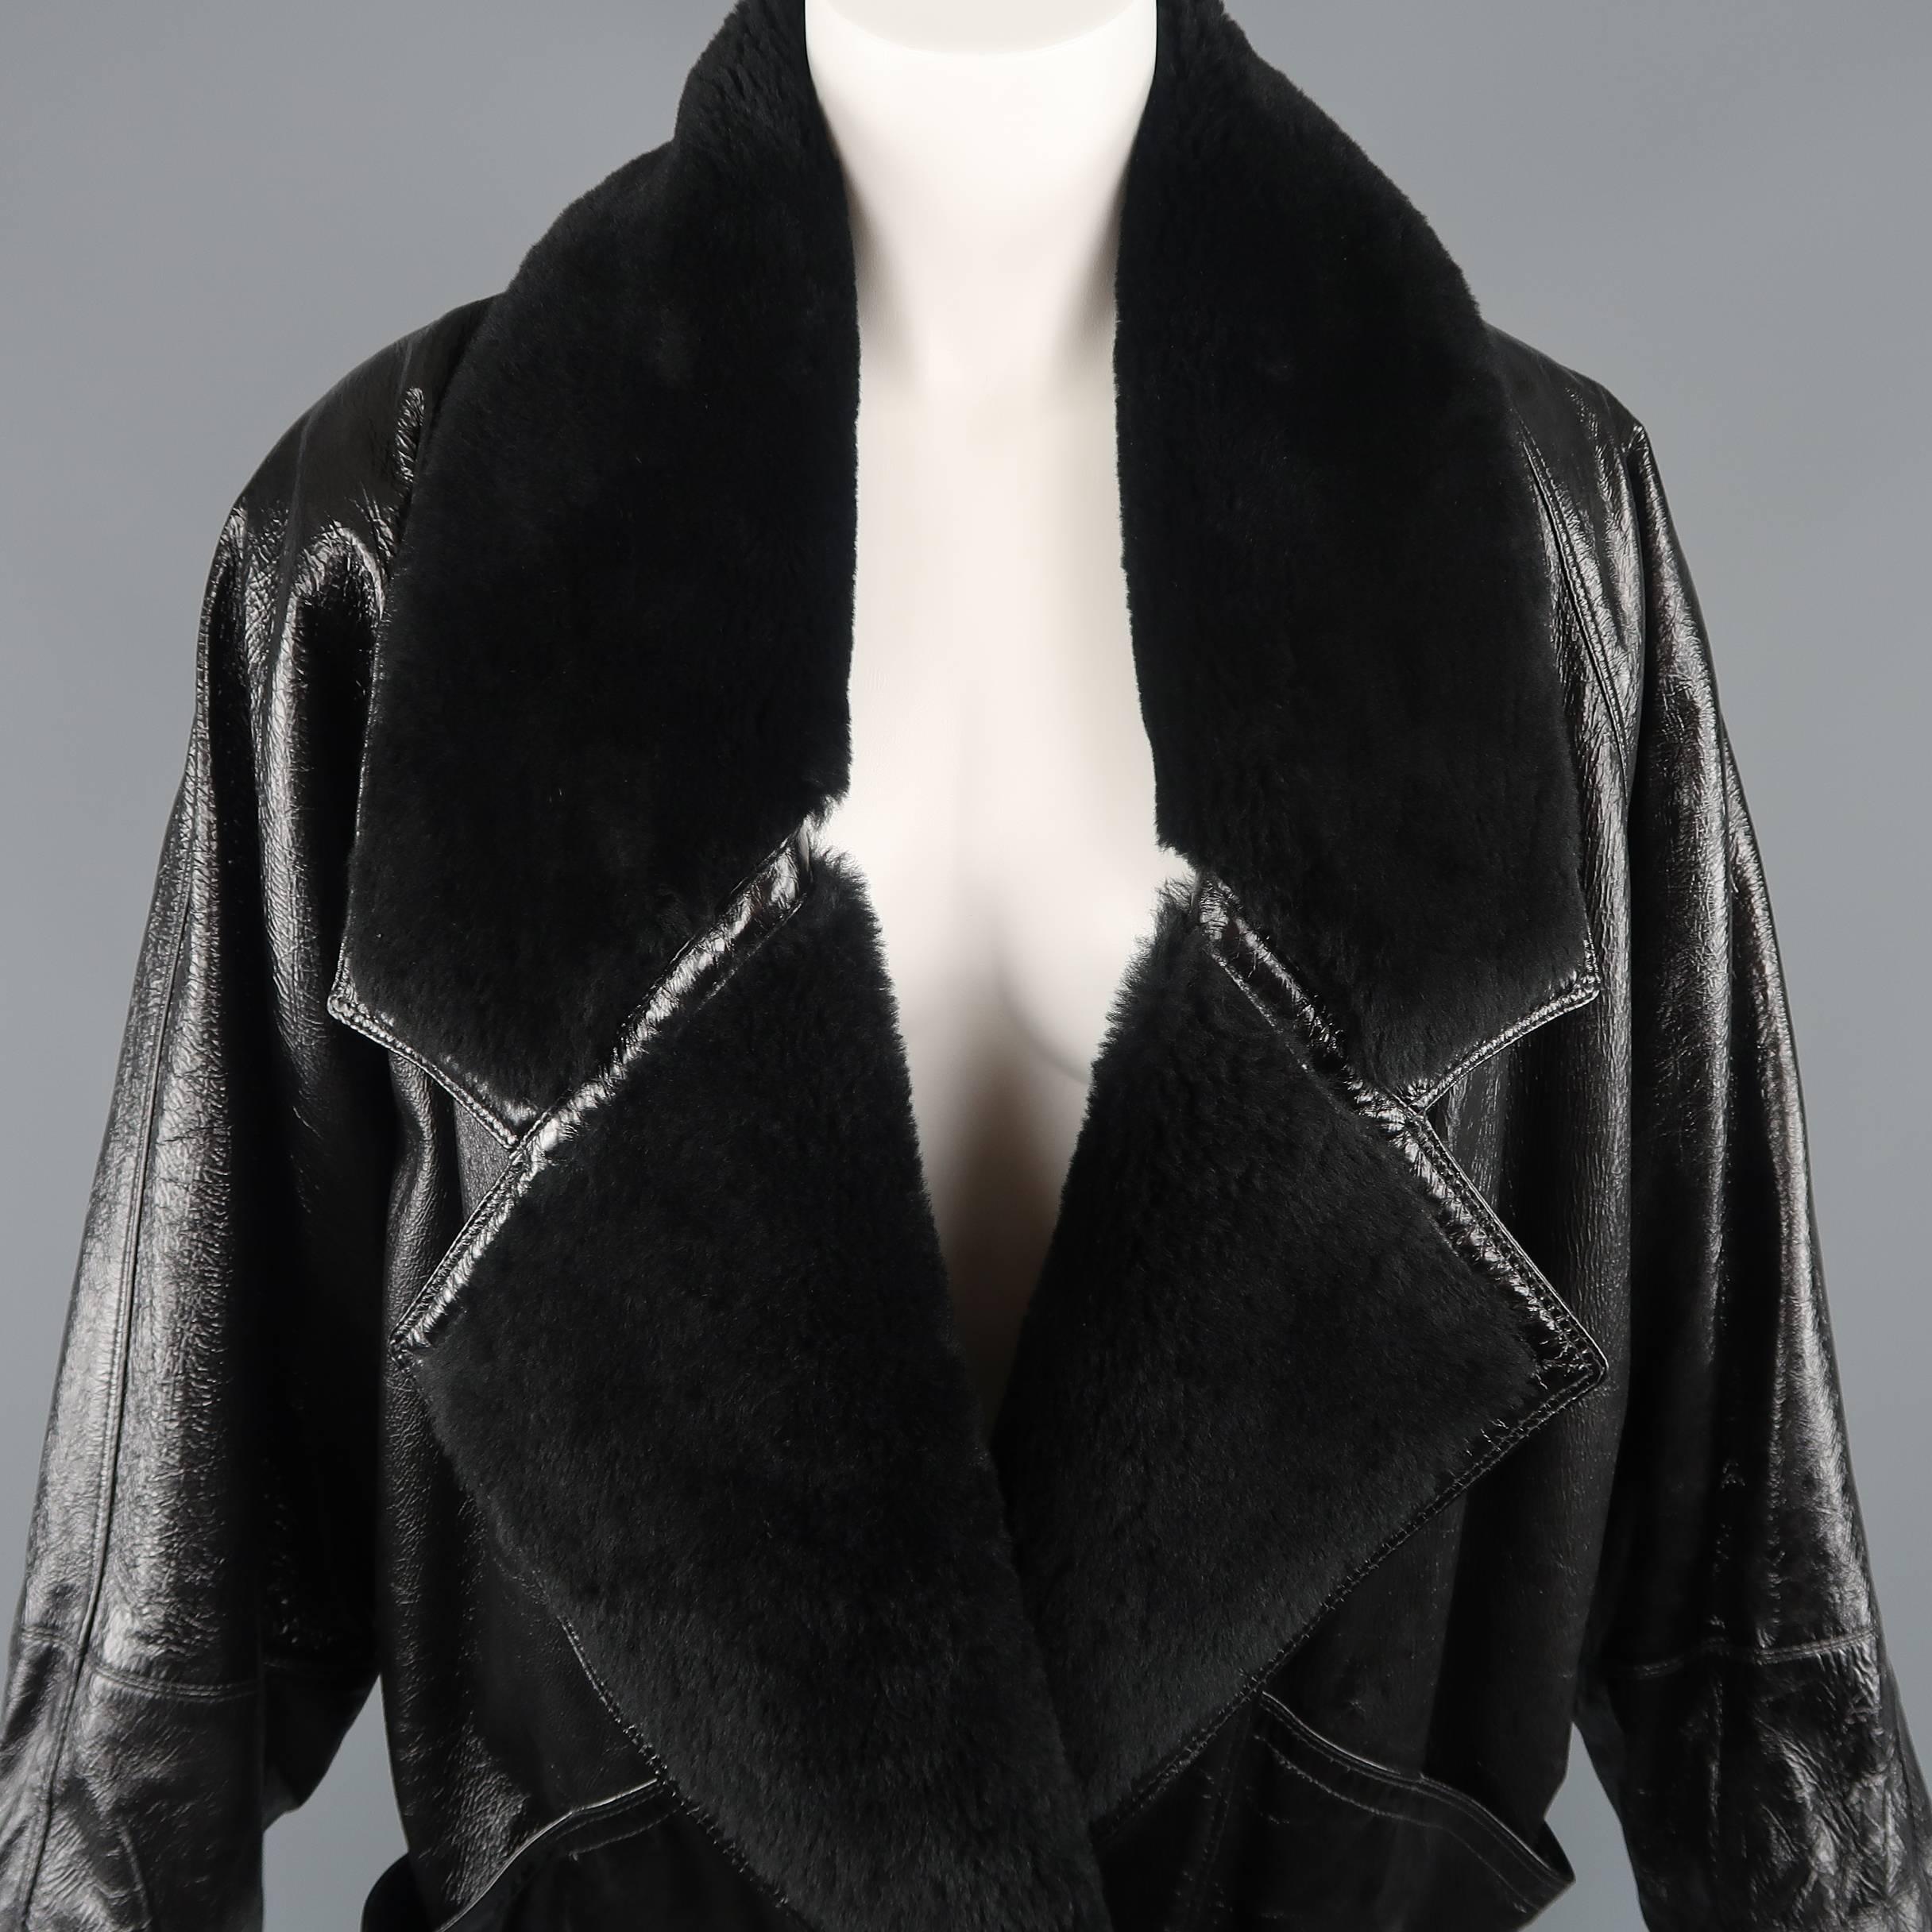 Women's or Men's Gianni Versace Coat - Vintage Black Leather Shearling Collar, 1980s Jacket